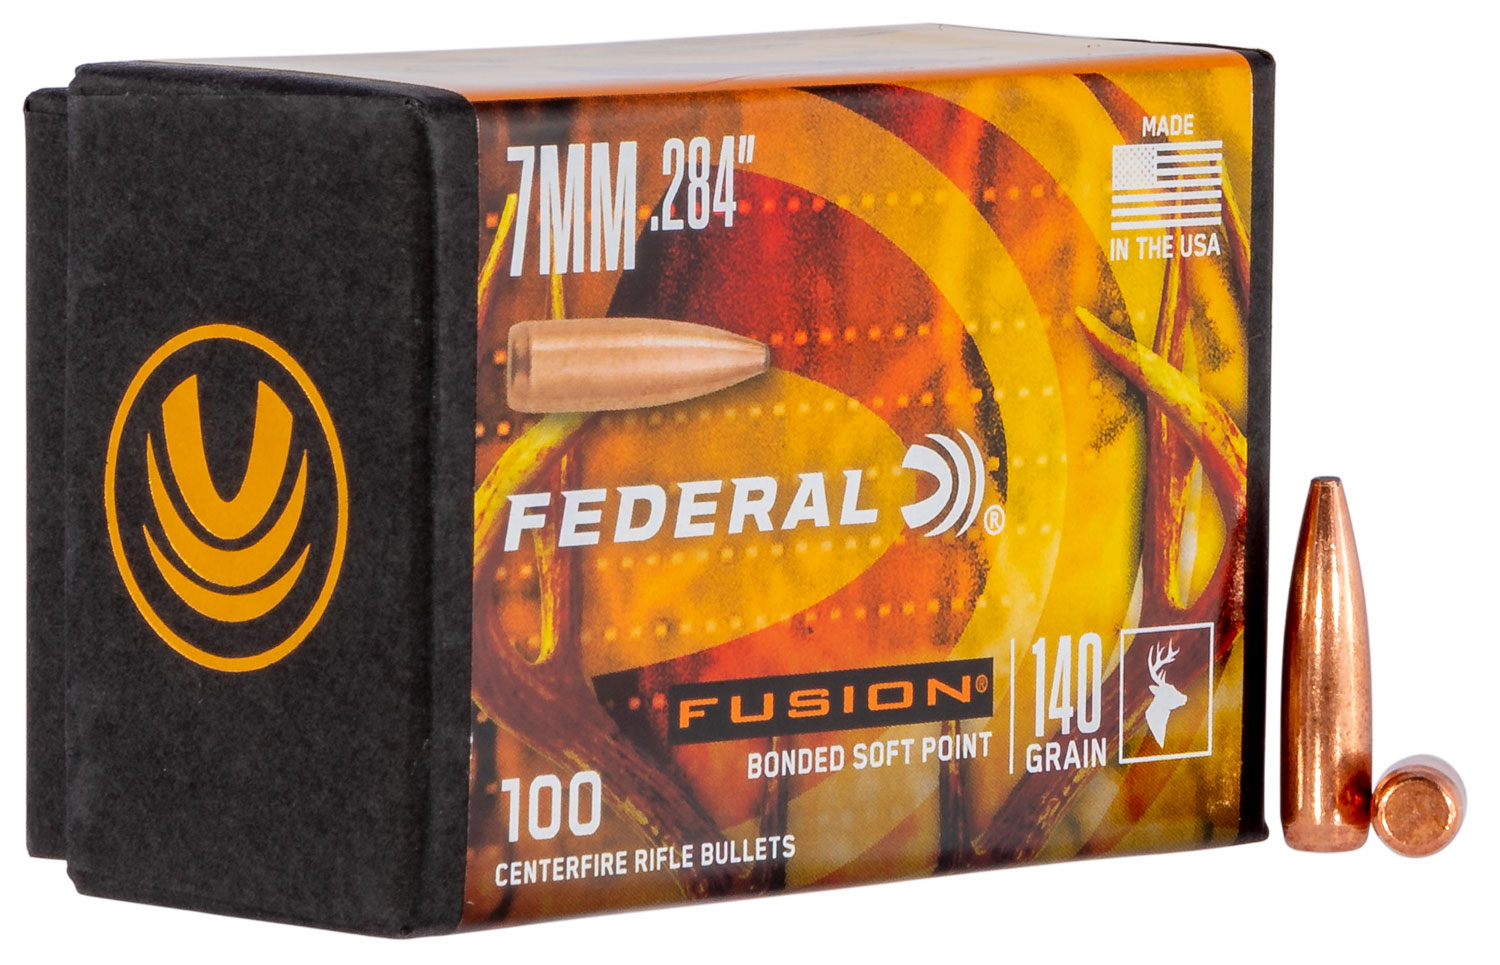 Federal FB284F1 Fusion Component  7mm .284 140 gr Fusion Soft Point 100 Per Box